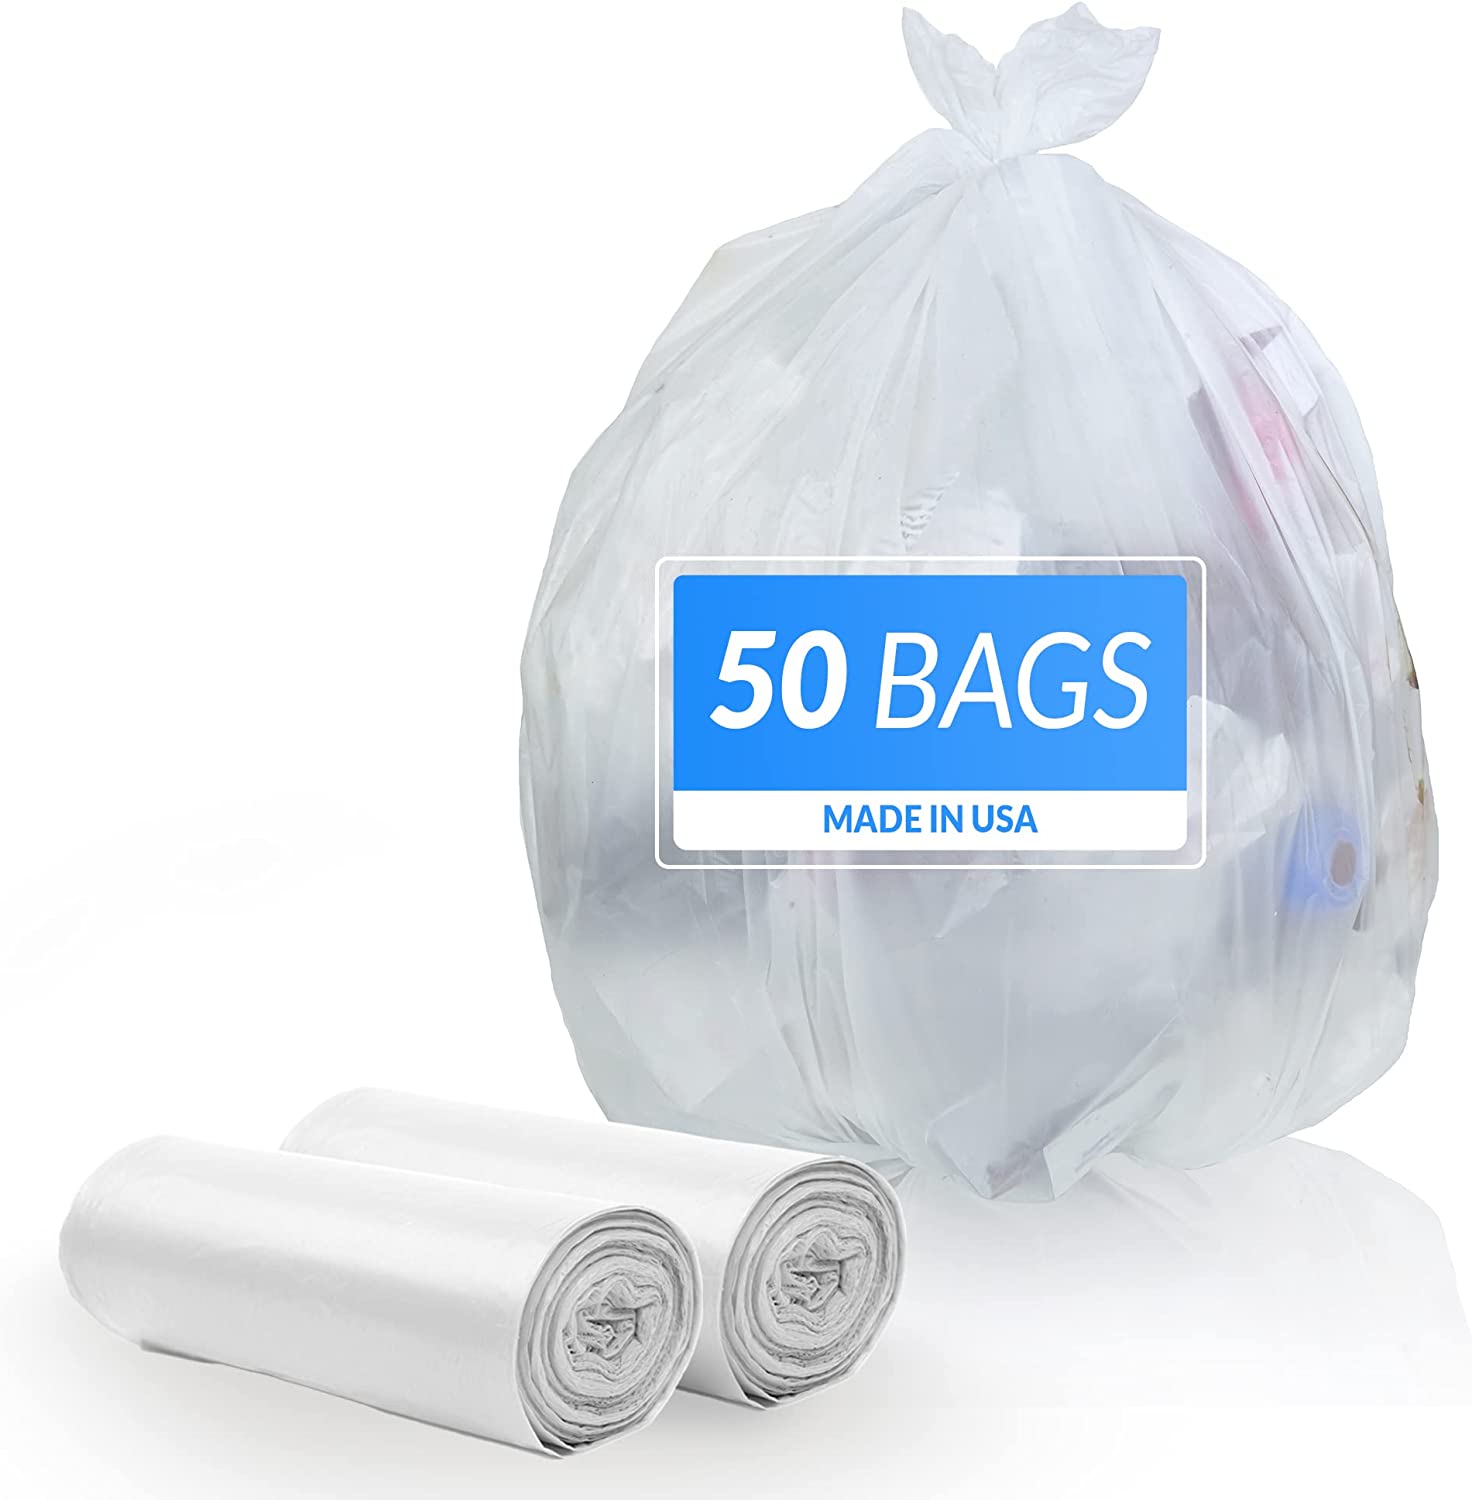 50bags,55-60 Gallon Trash Bags Heavy Duty, 150 Bags